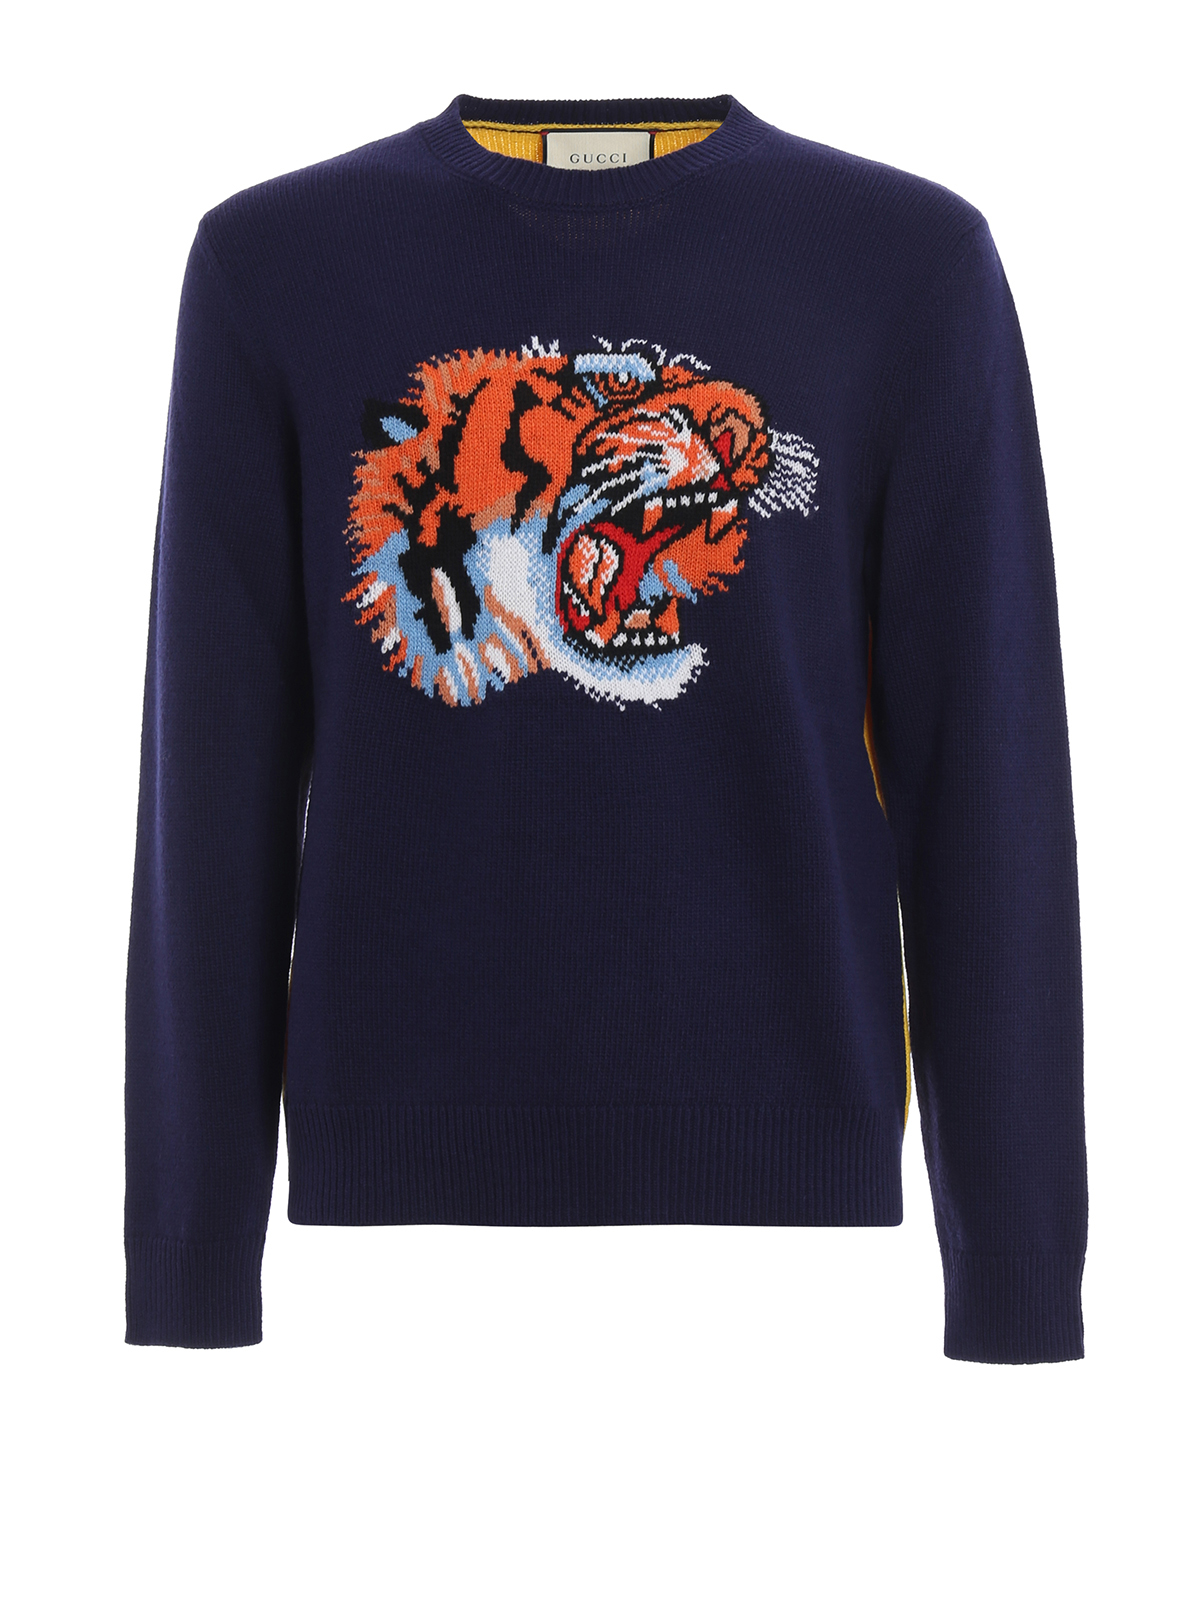 gucci lion sweater